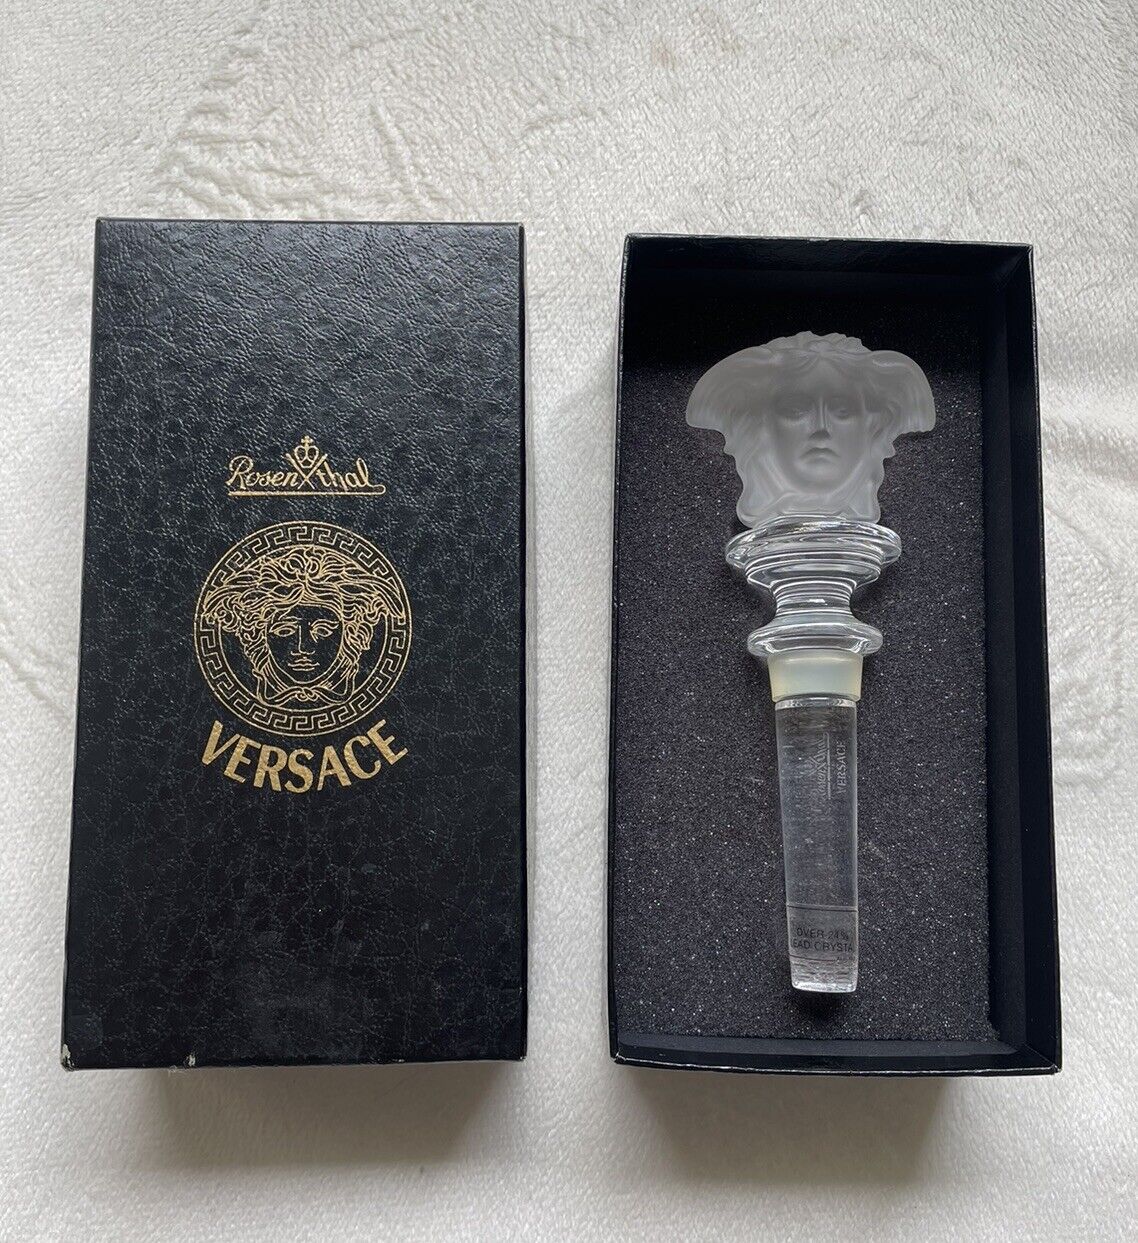 Rosenthal Versace Tressury Medusa Frosted Crystal Bottle Stopper Topper 